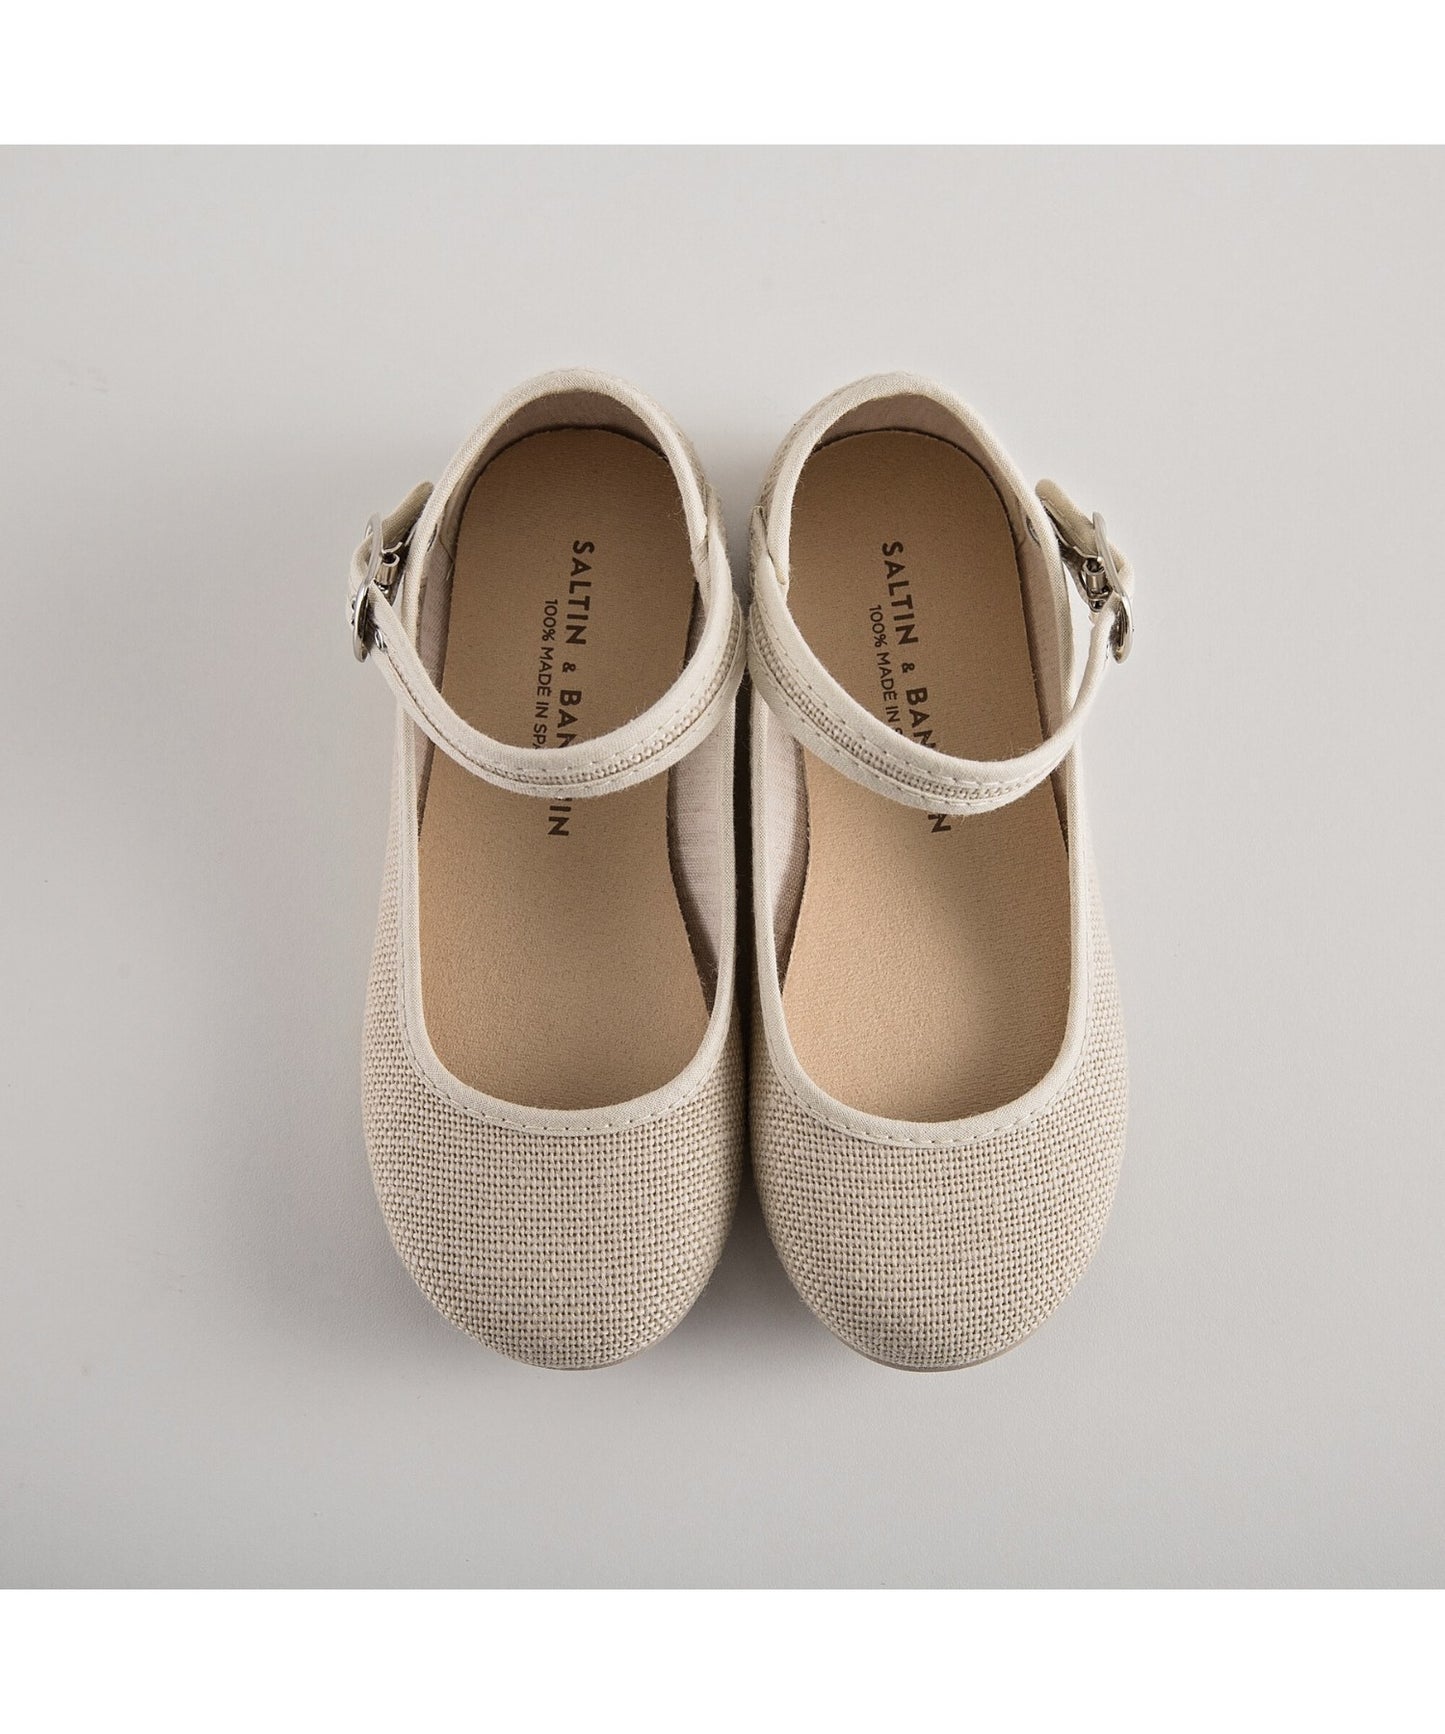 Flower Girl Bridesmaid Shoes - Natural